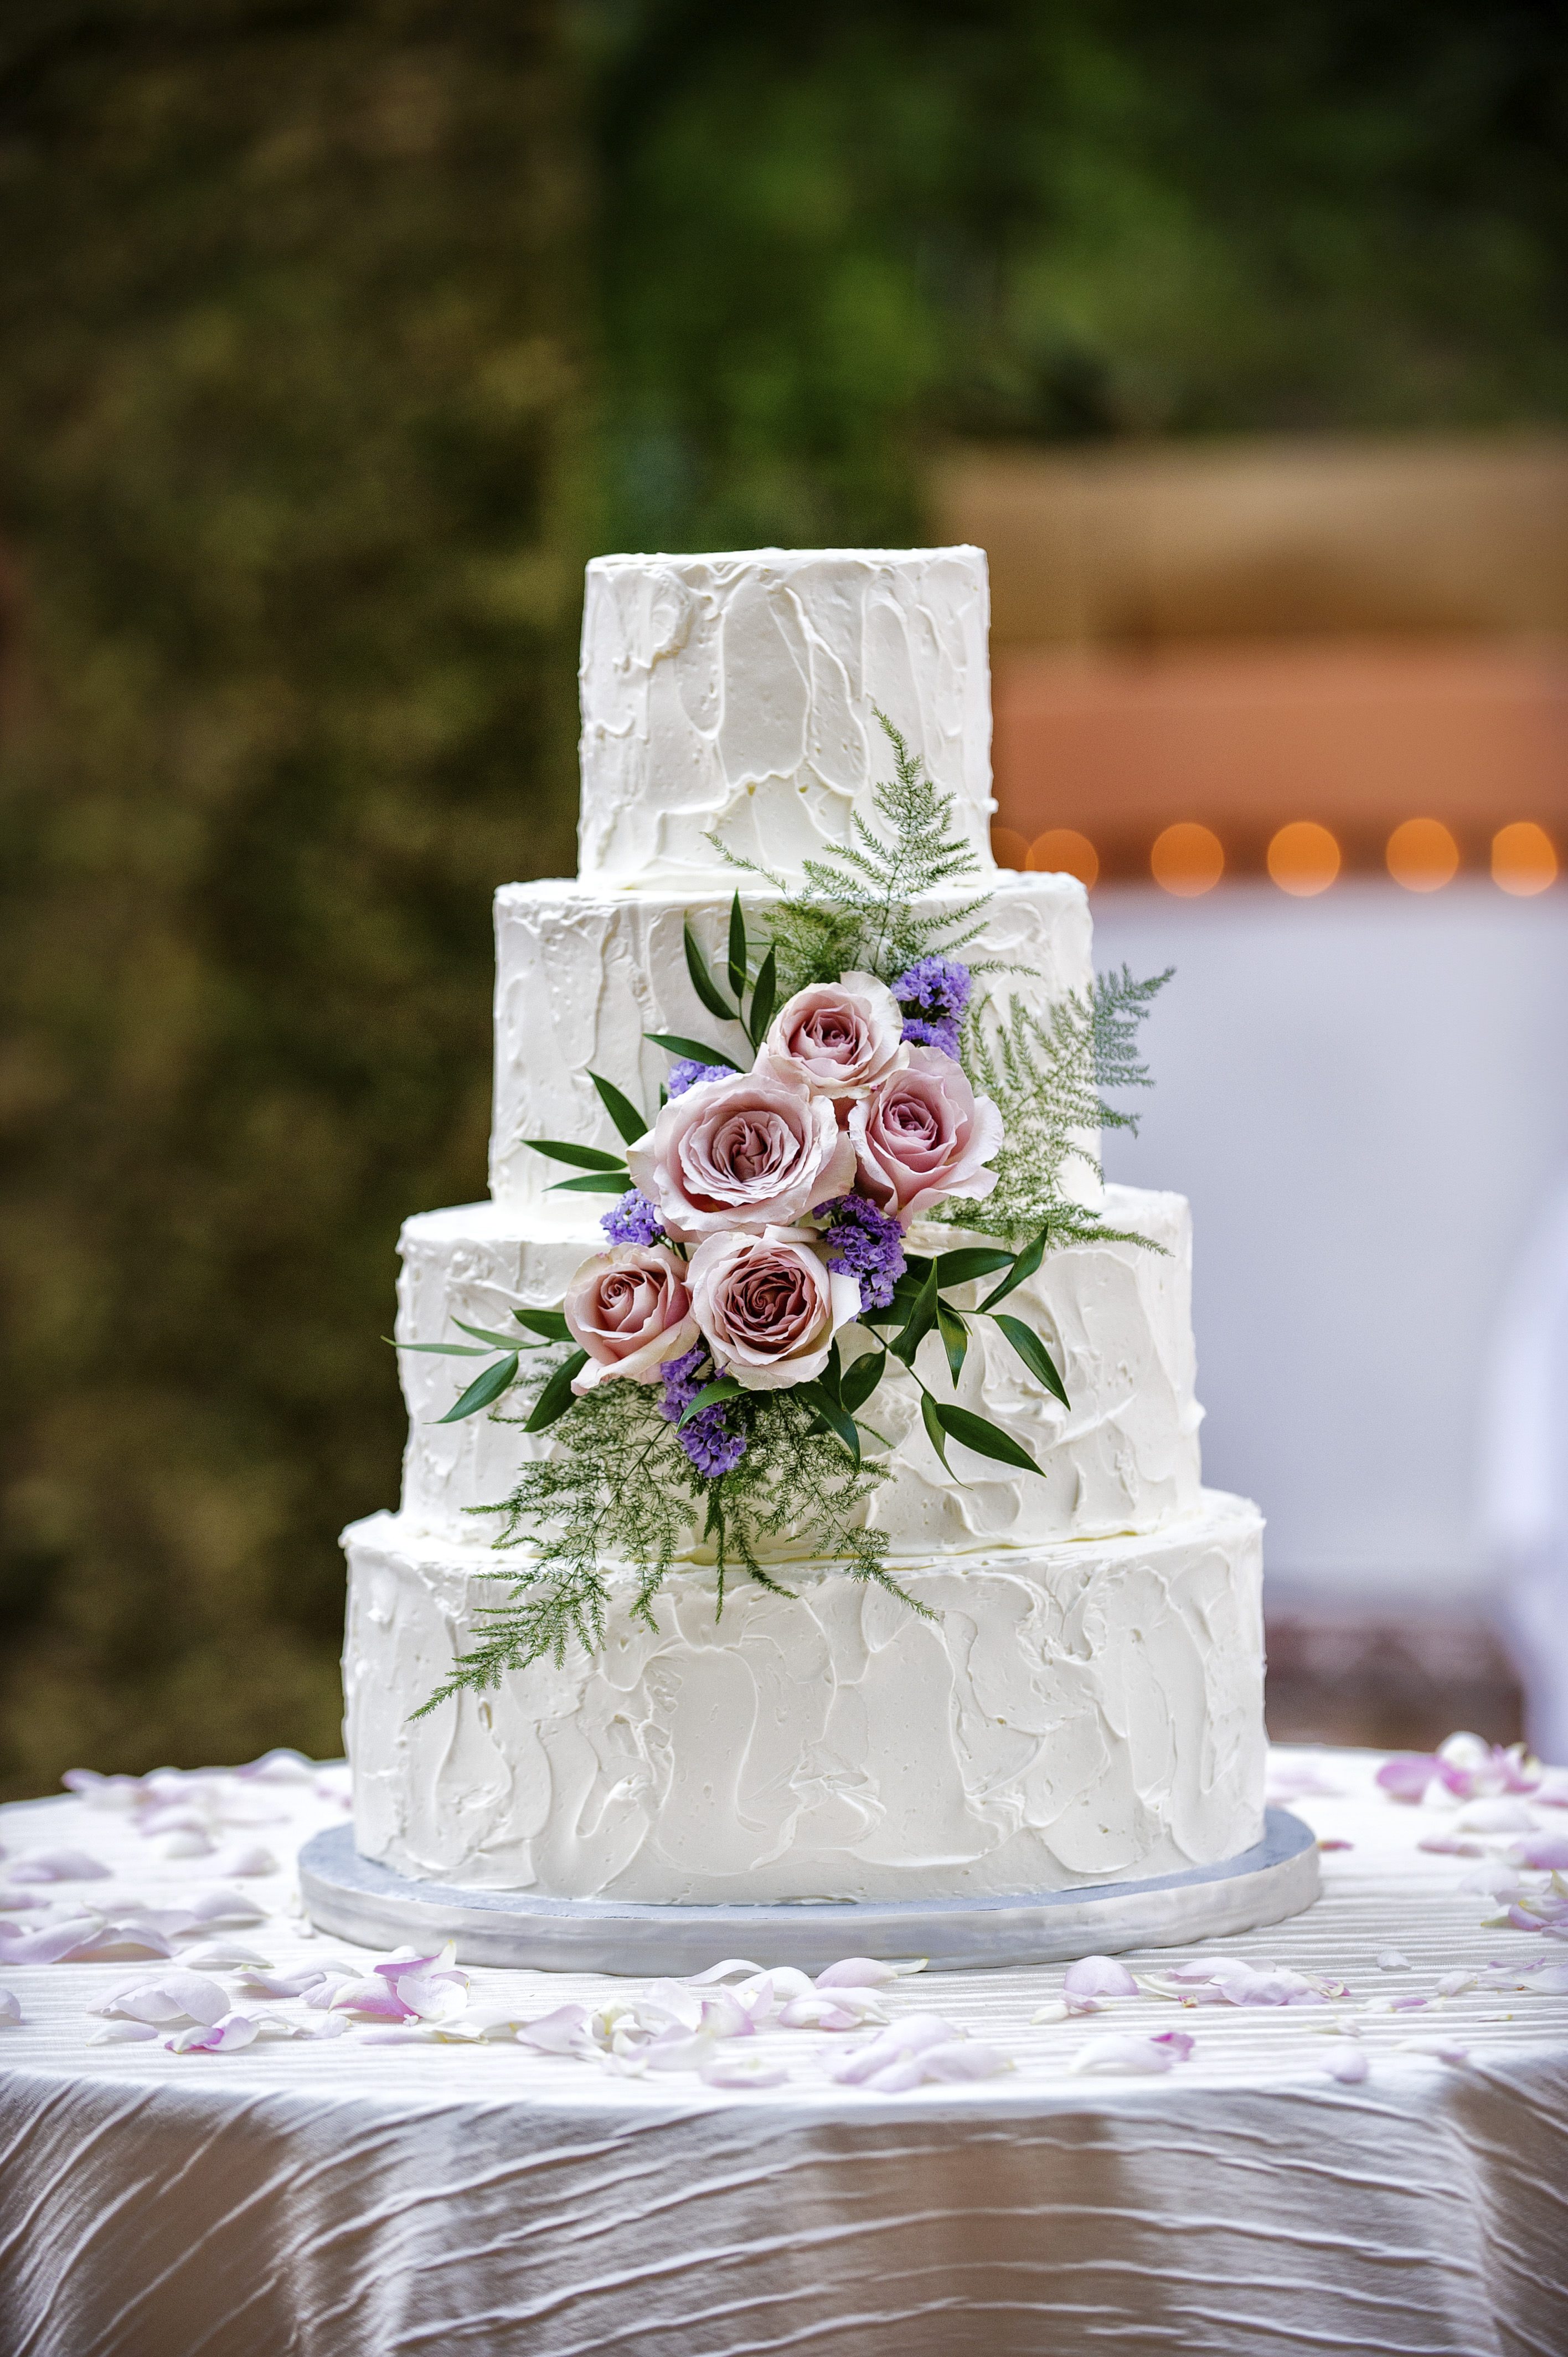 25th wedding anniversary cake | Wedding anniversary cakes, 25th wedding  anniversary cakes, Marriage anniversary cake